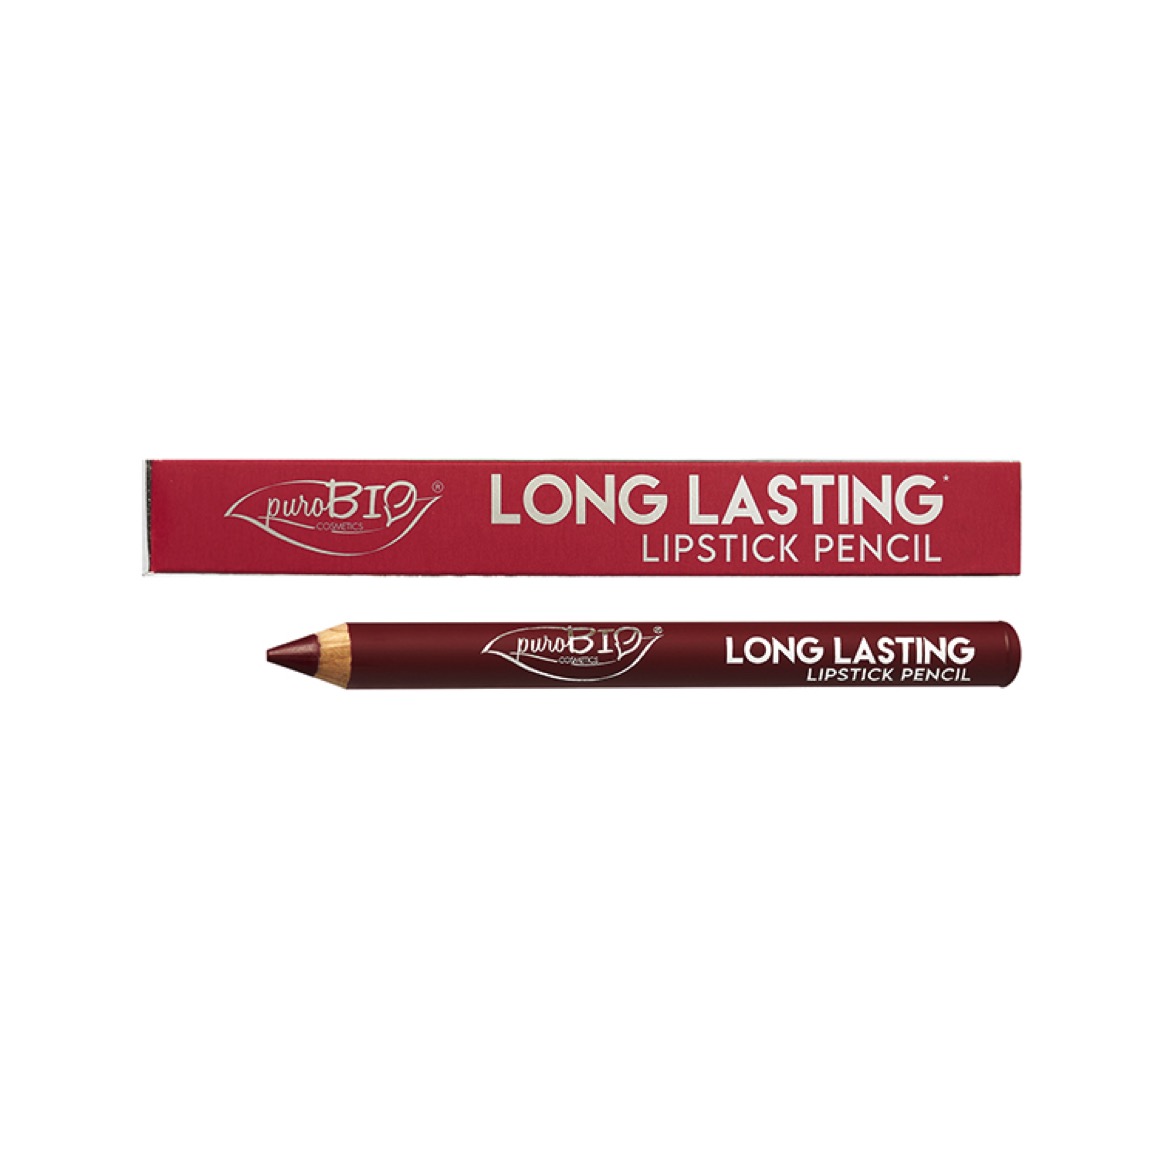 Long Lasting Lipstick Pencil Kingsize Strawberry Red 014L